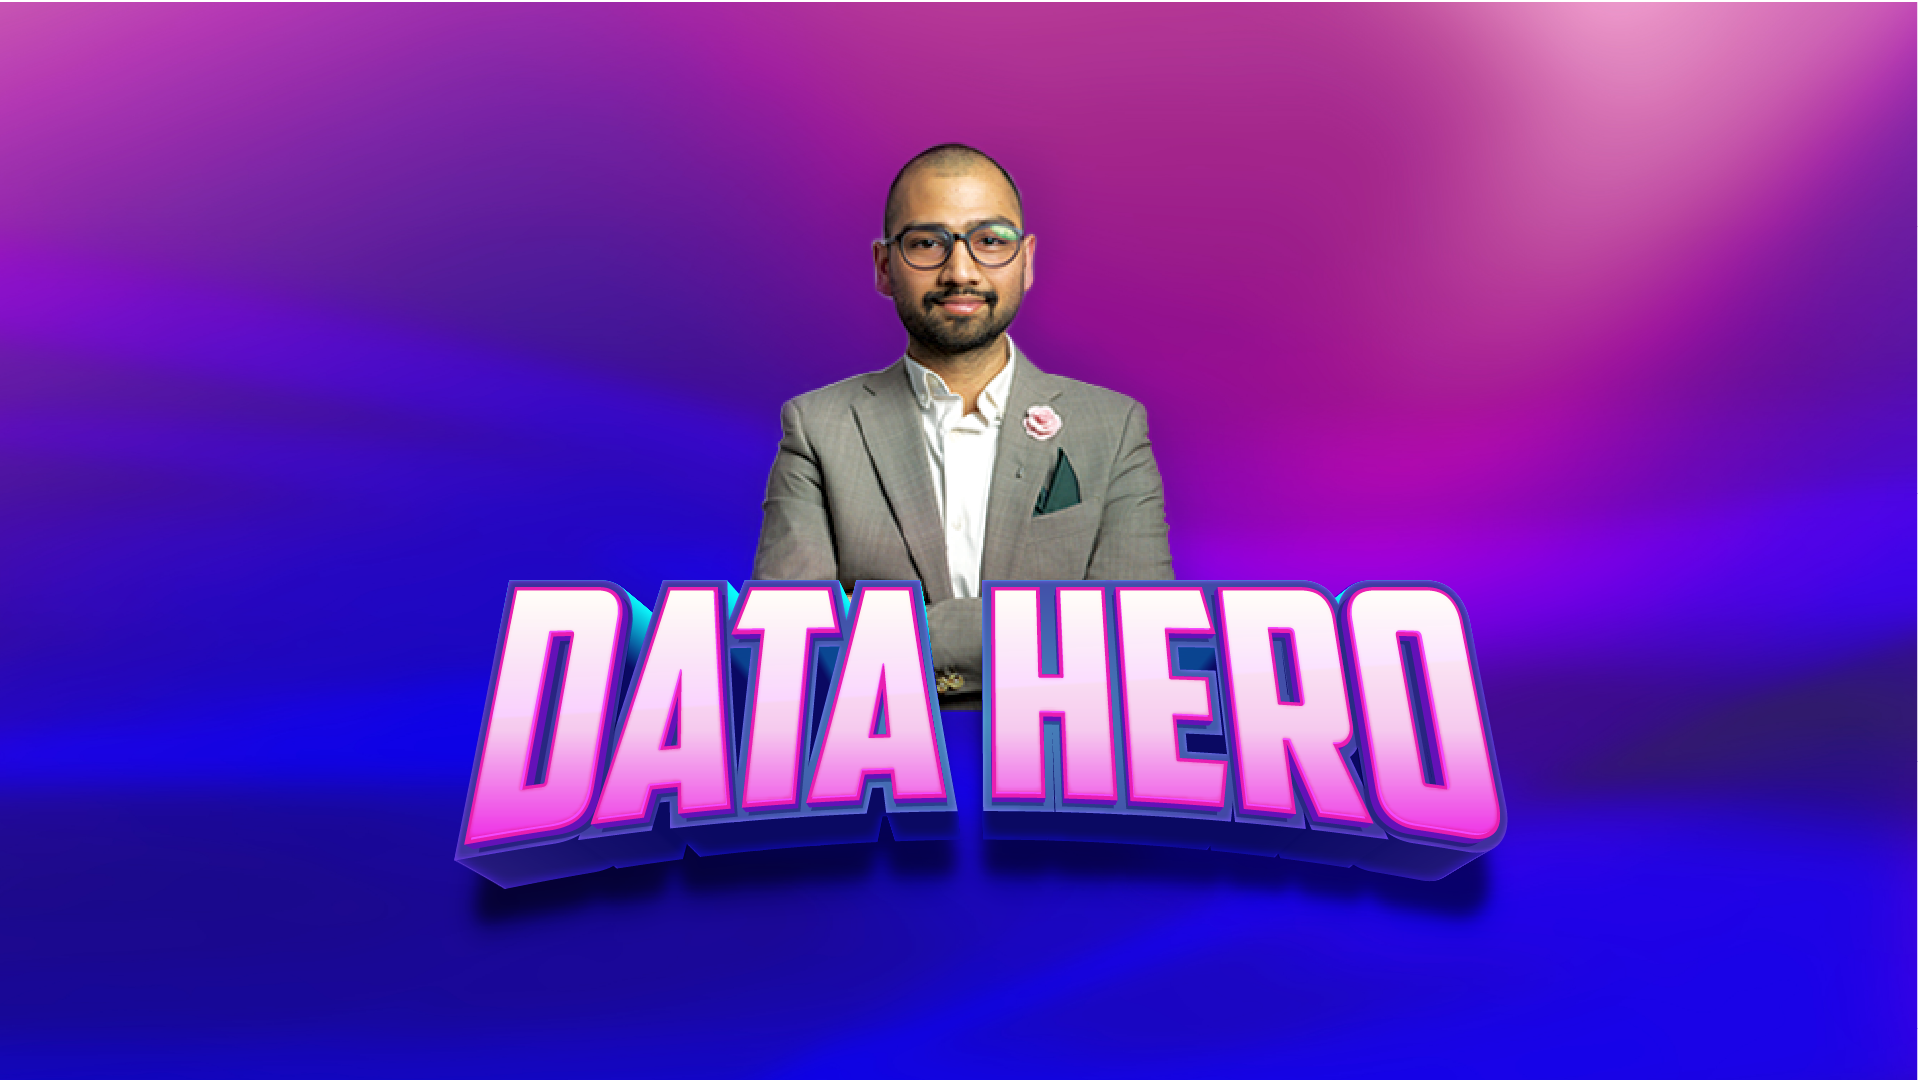 Raj Jain, Marketing Operations and Marketing Automation at MongoDB